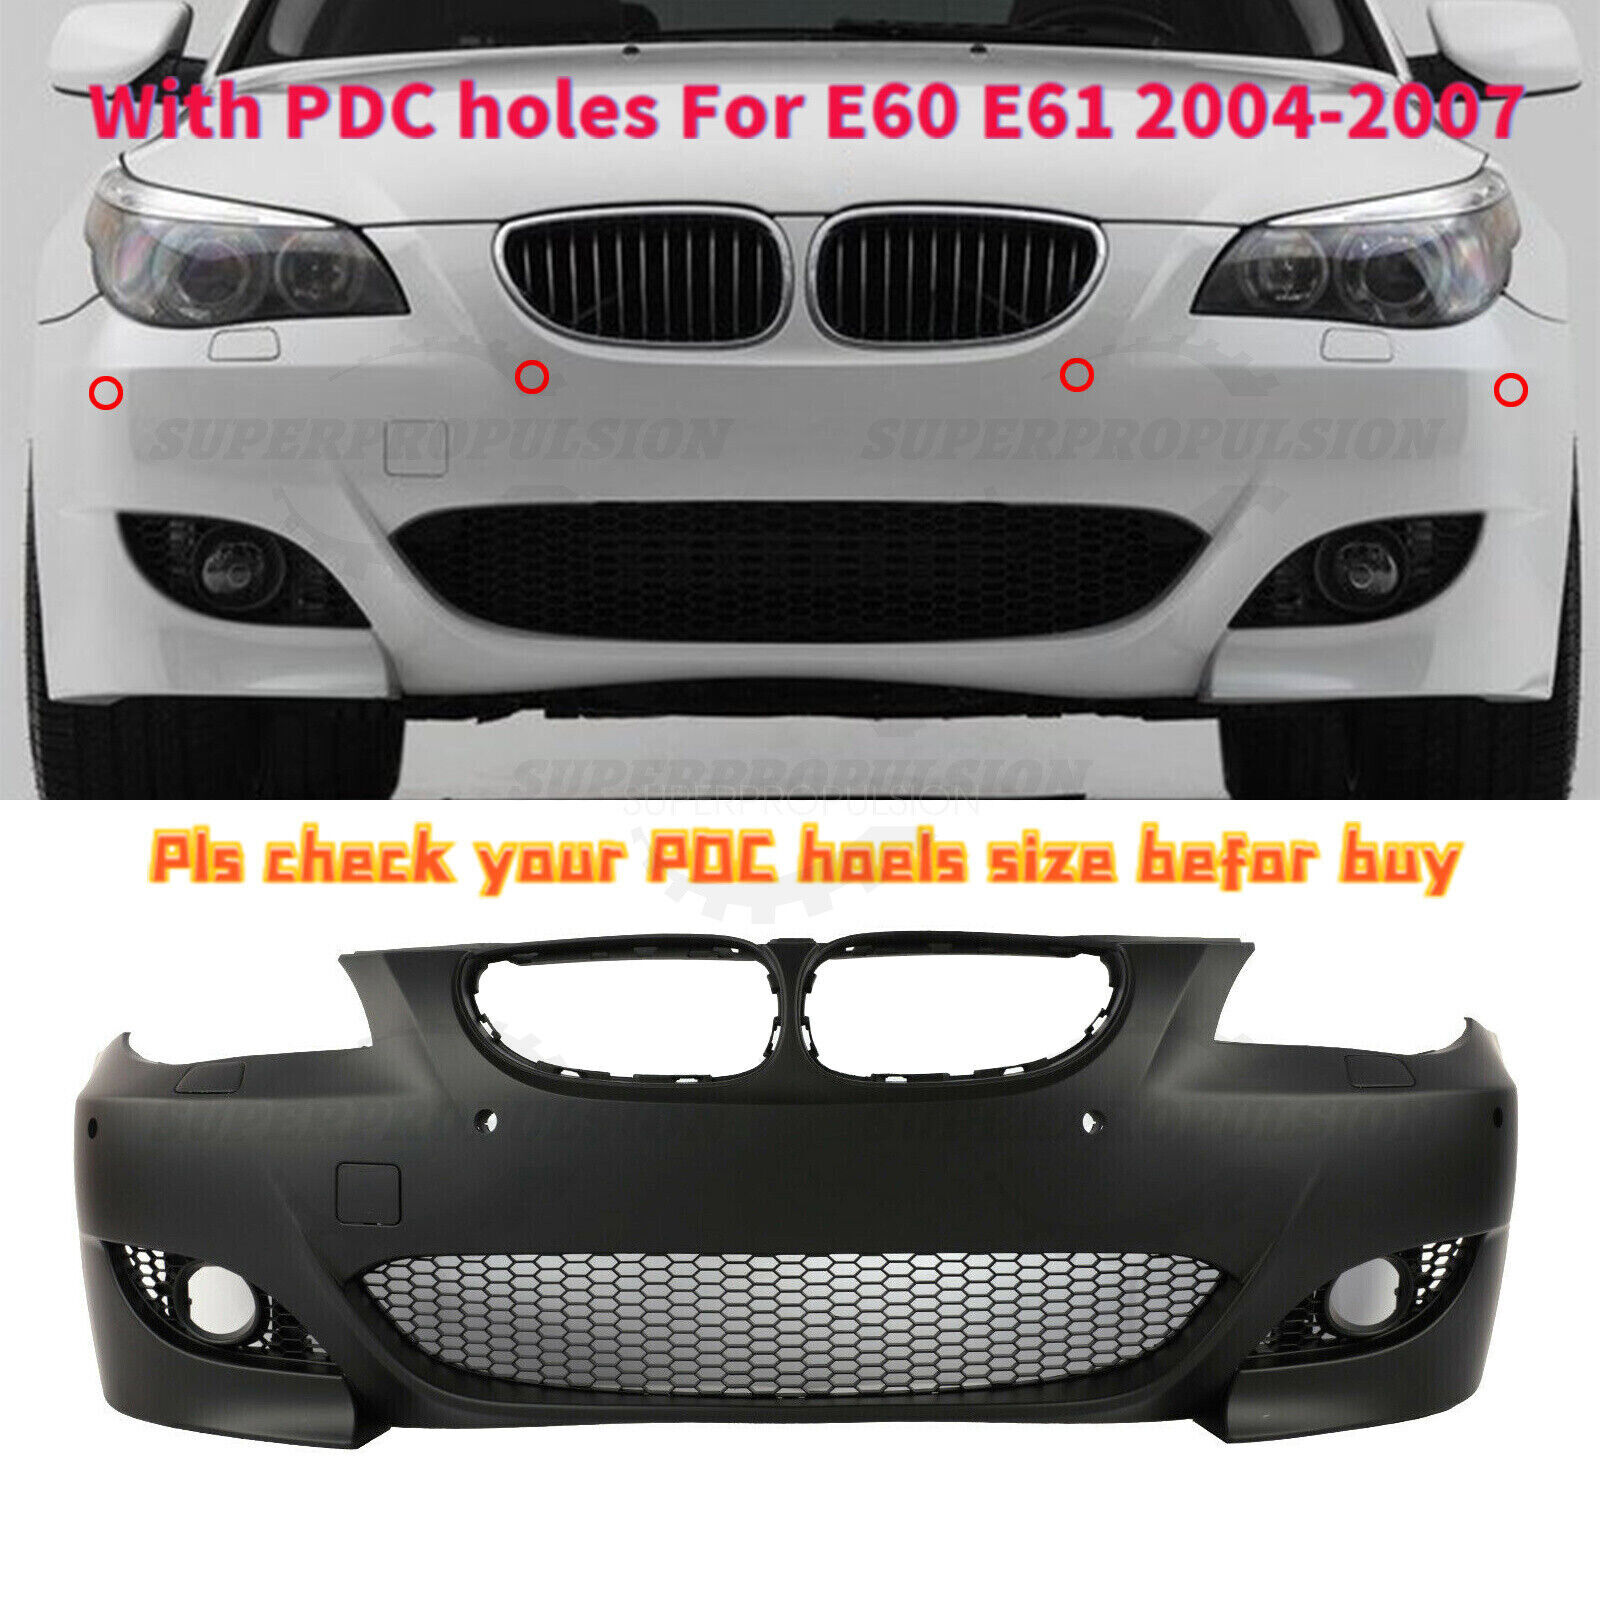 M5 Style Bumper Cover Kit For BMW E60 E61 525i 530i 550i With PDC Holes 2004-07